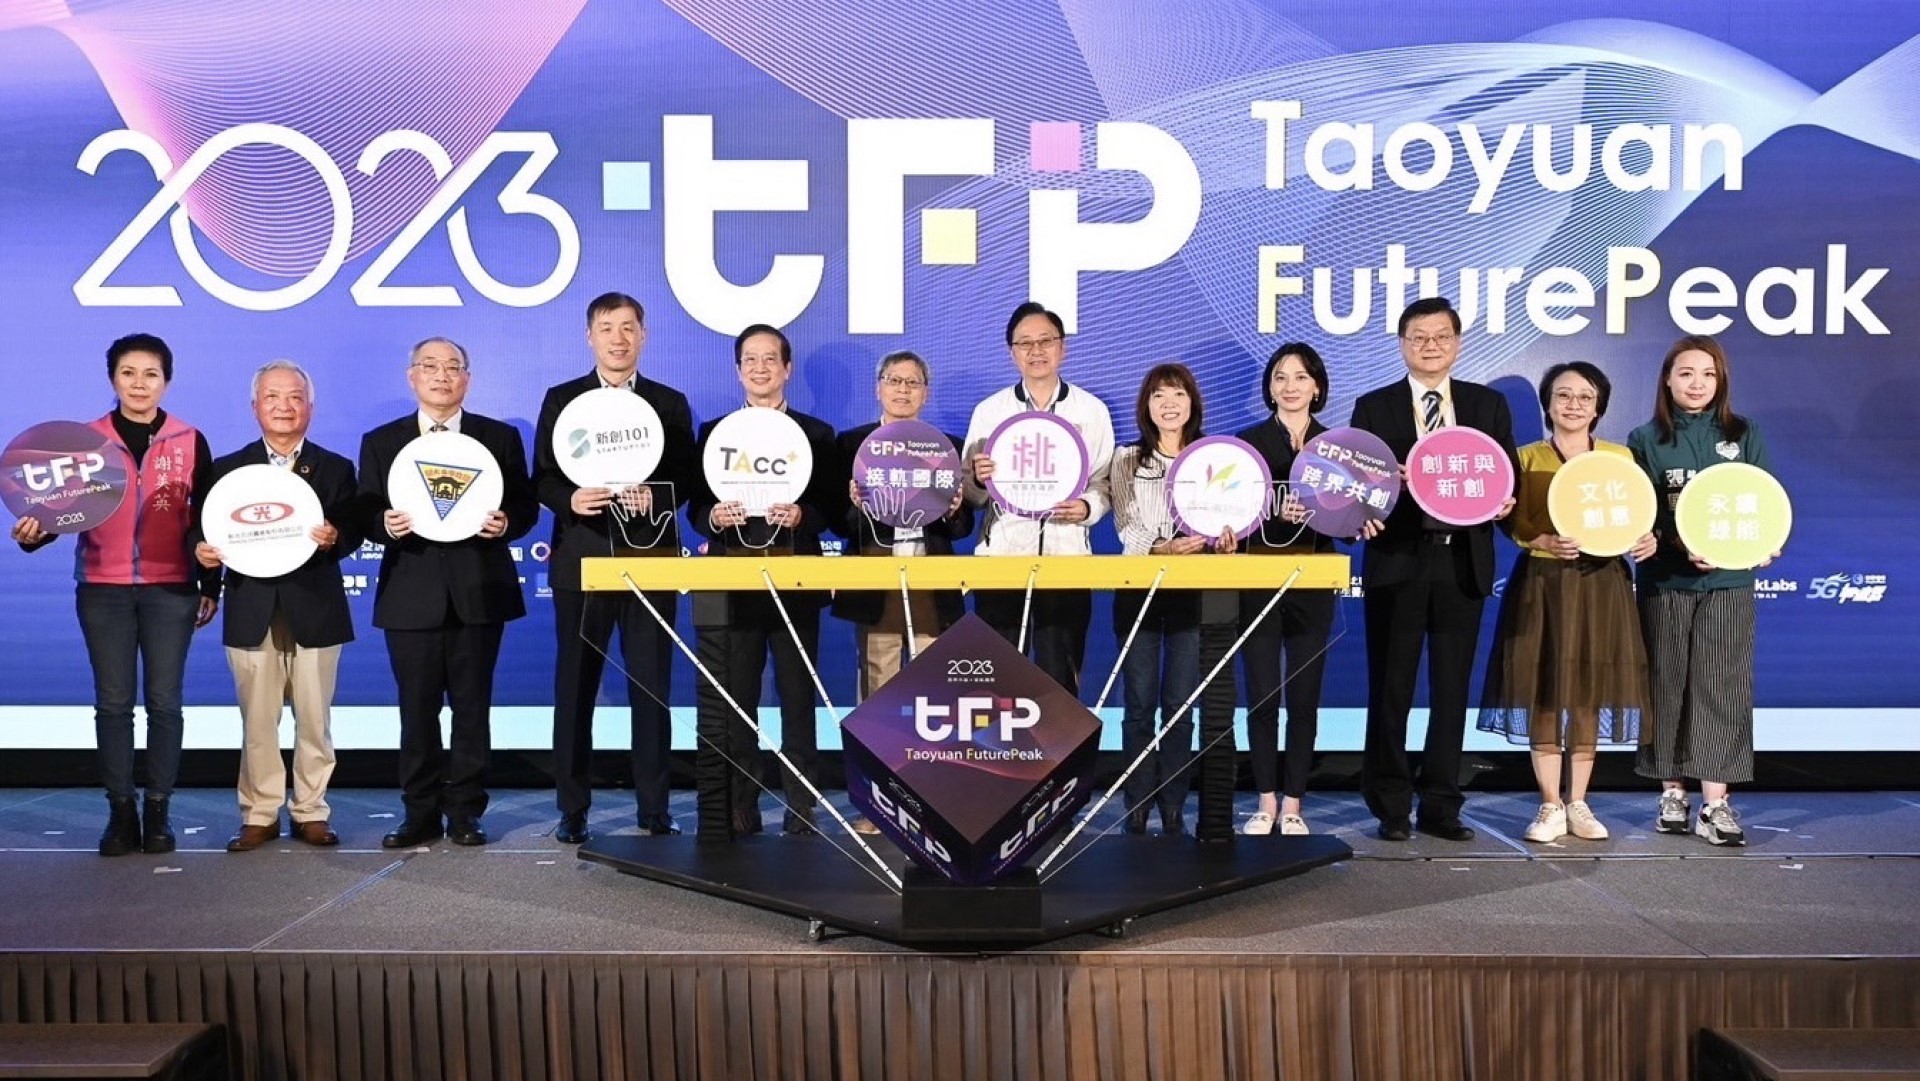  Taoyuan FuturePeak Expo unites 100 youth startups